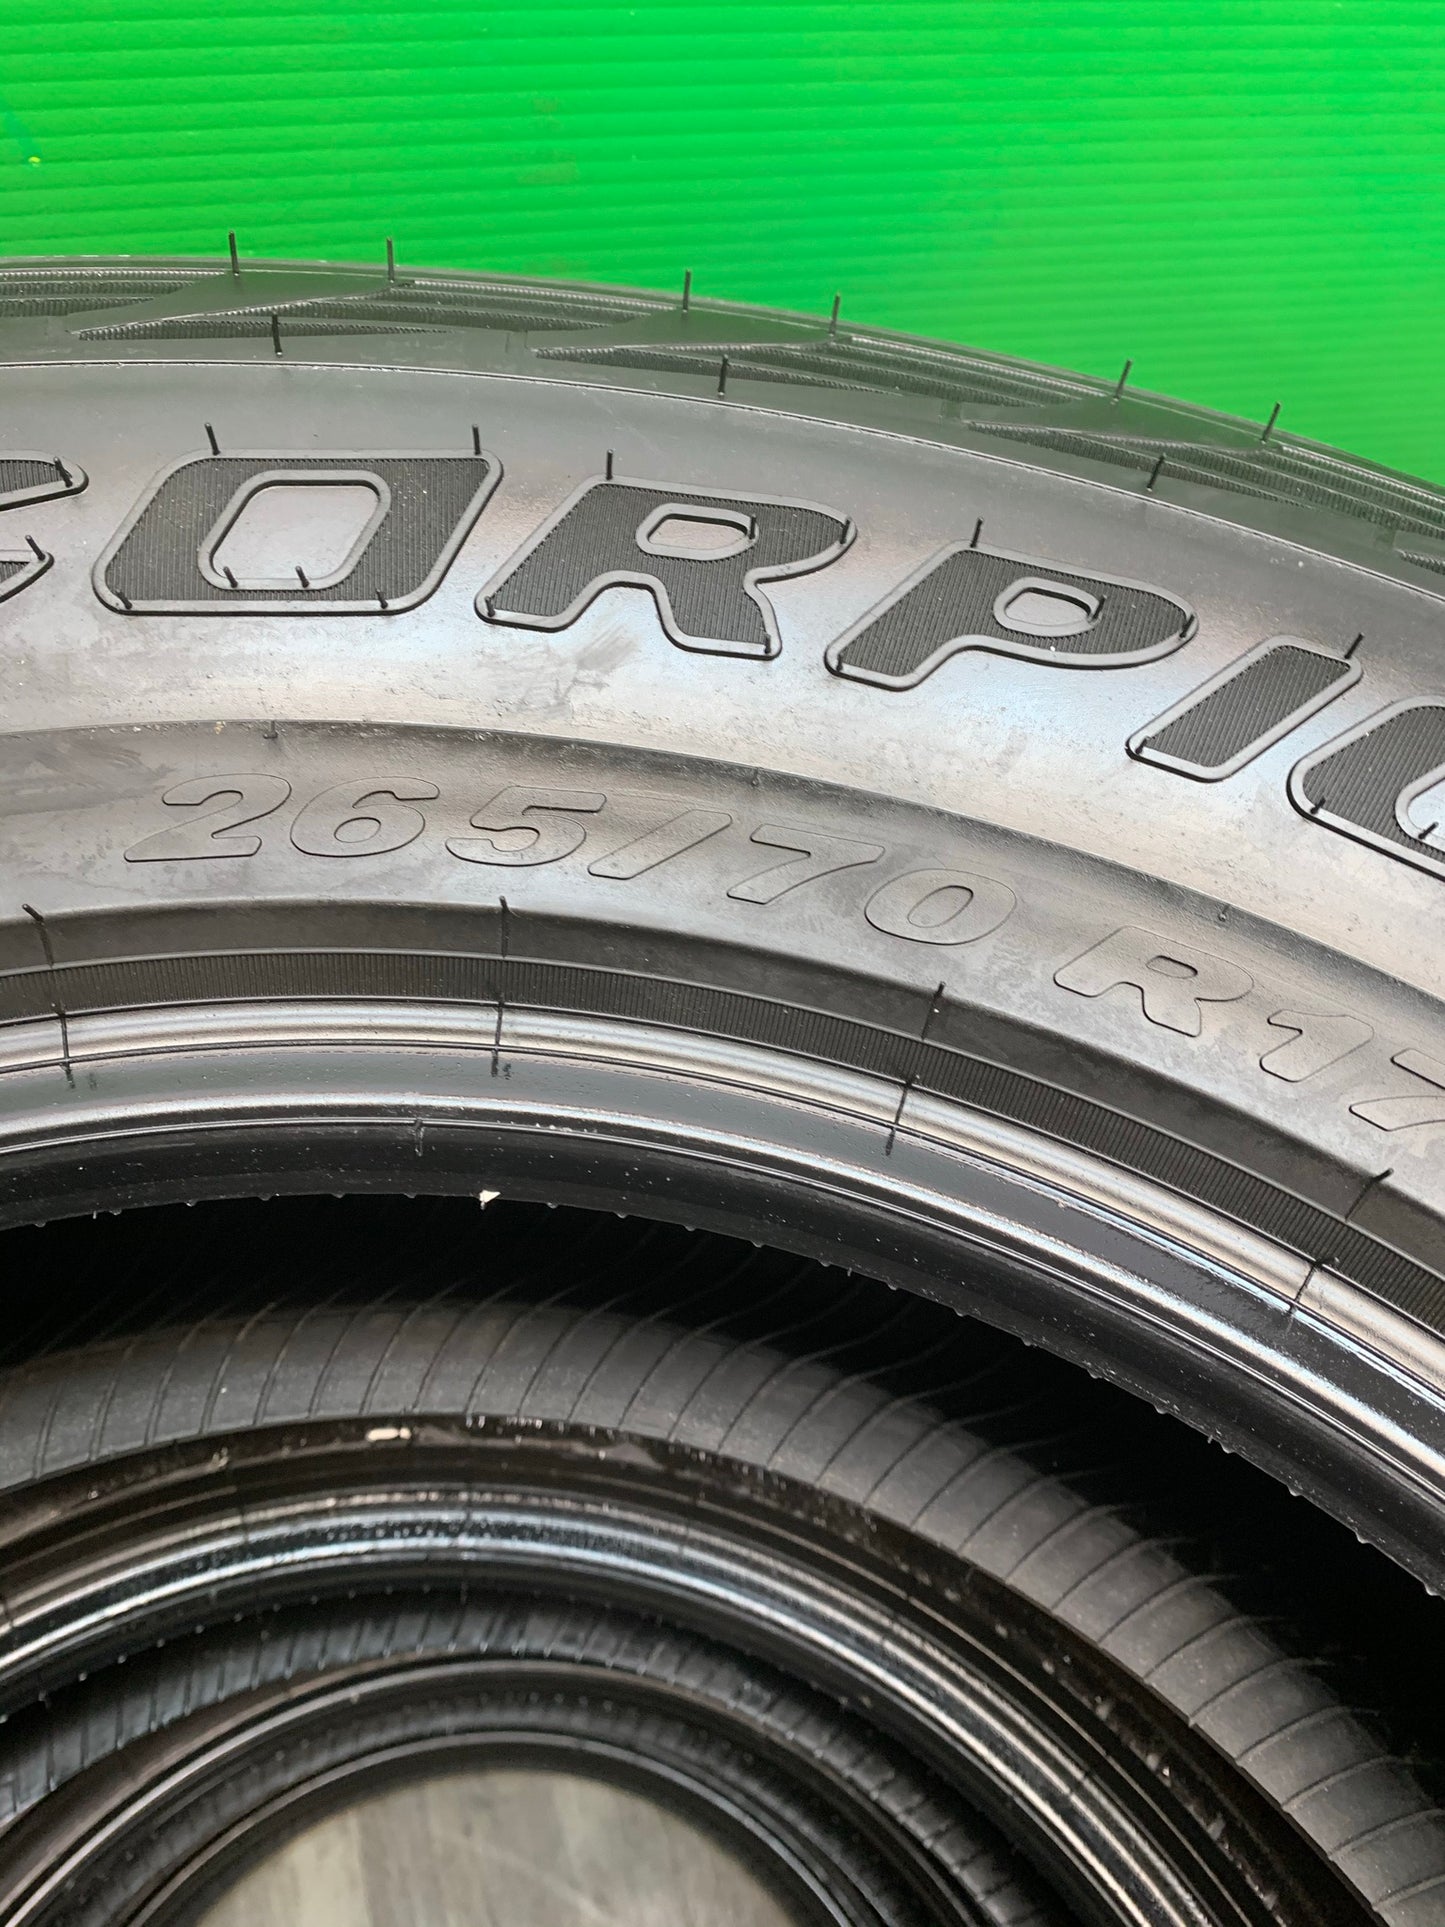 265/70/17 Pirelli SCORPION ATR All Season Tires (Takeoffs)